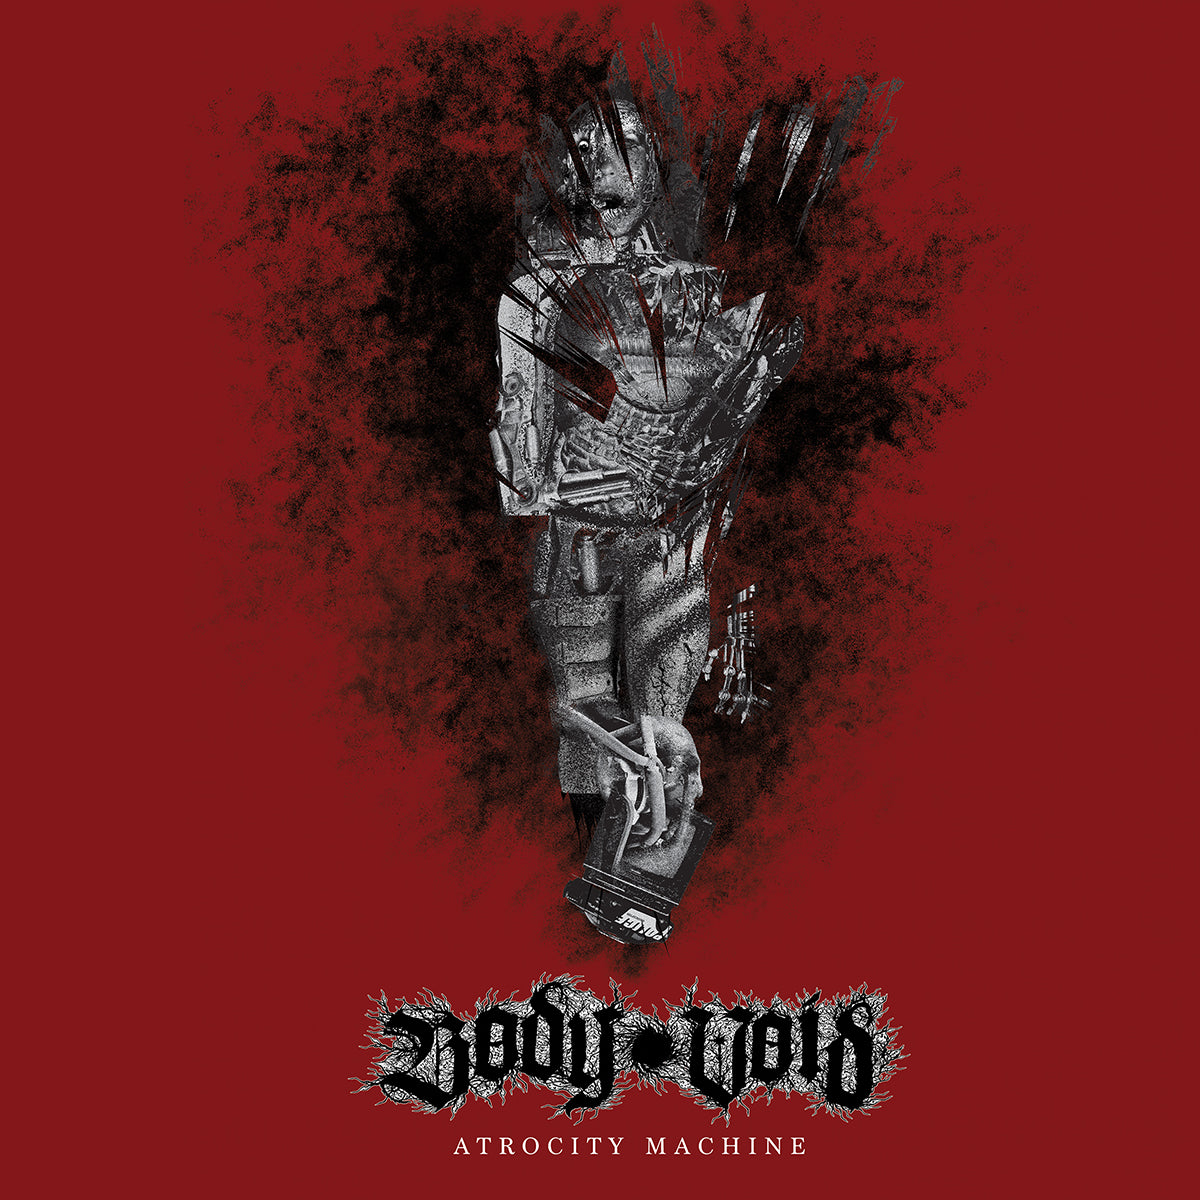 BODY VOID "Atrocity Machine" LP